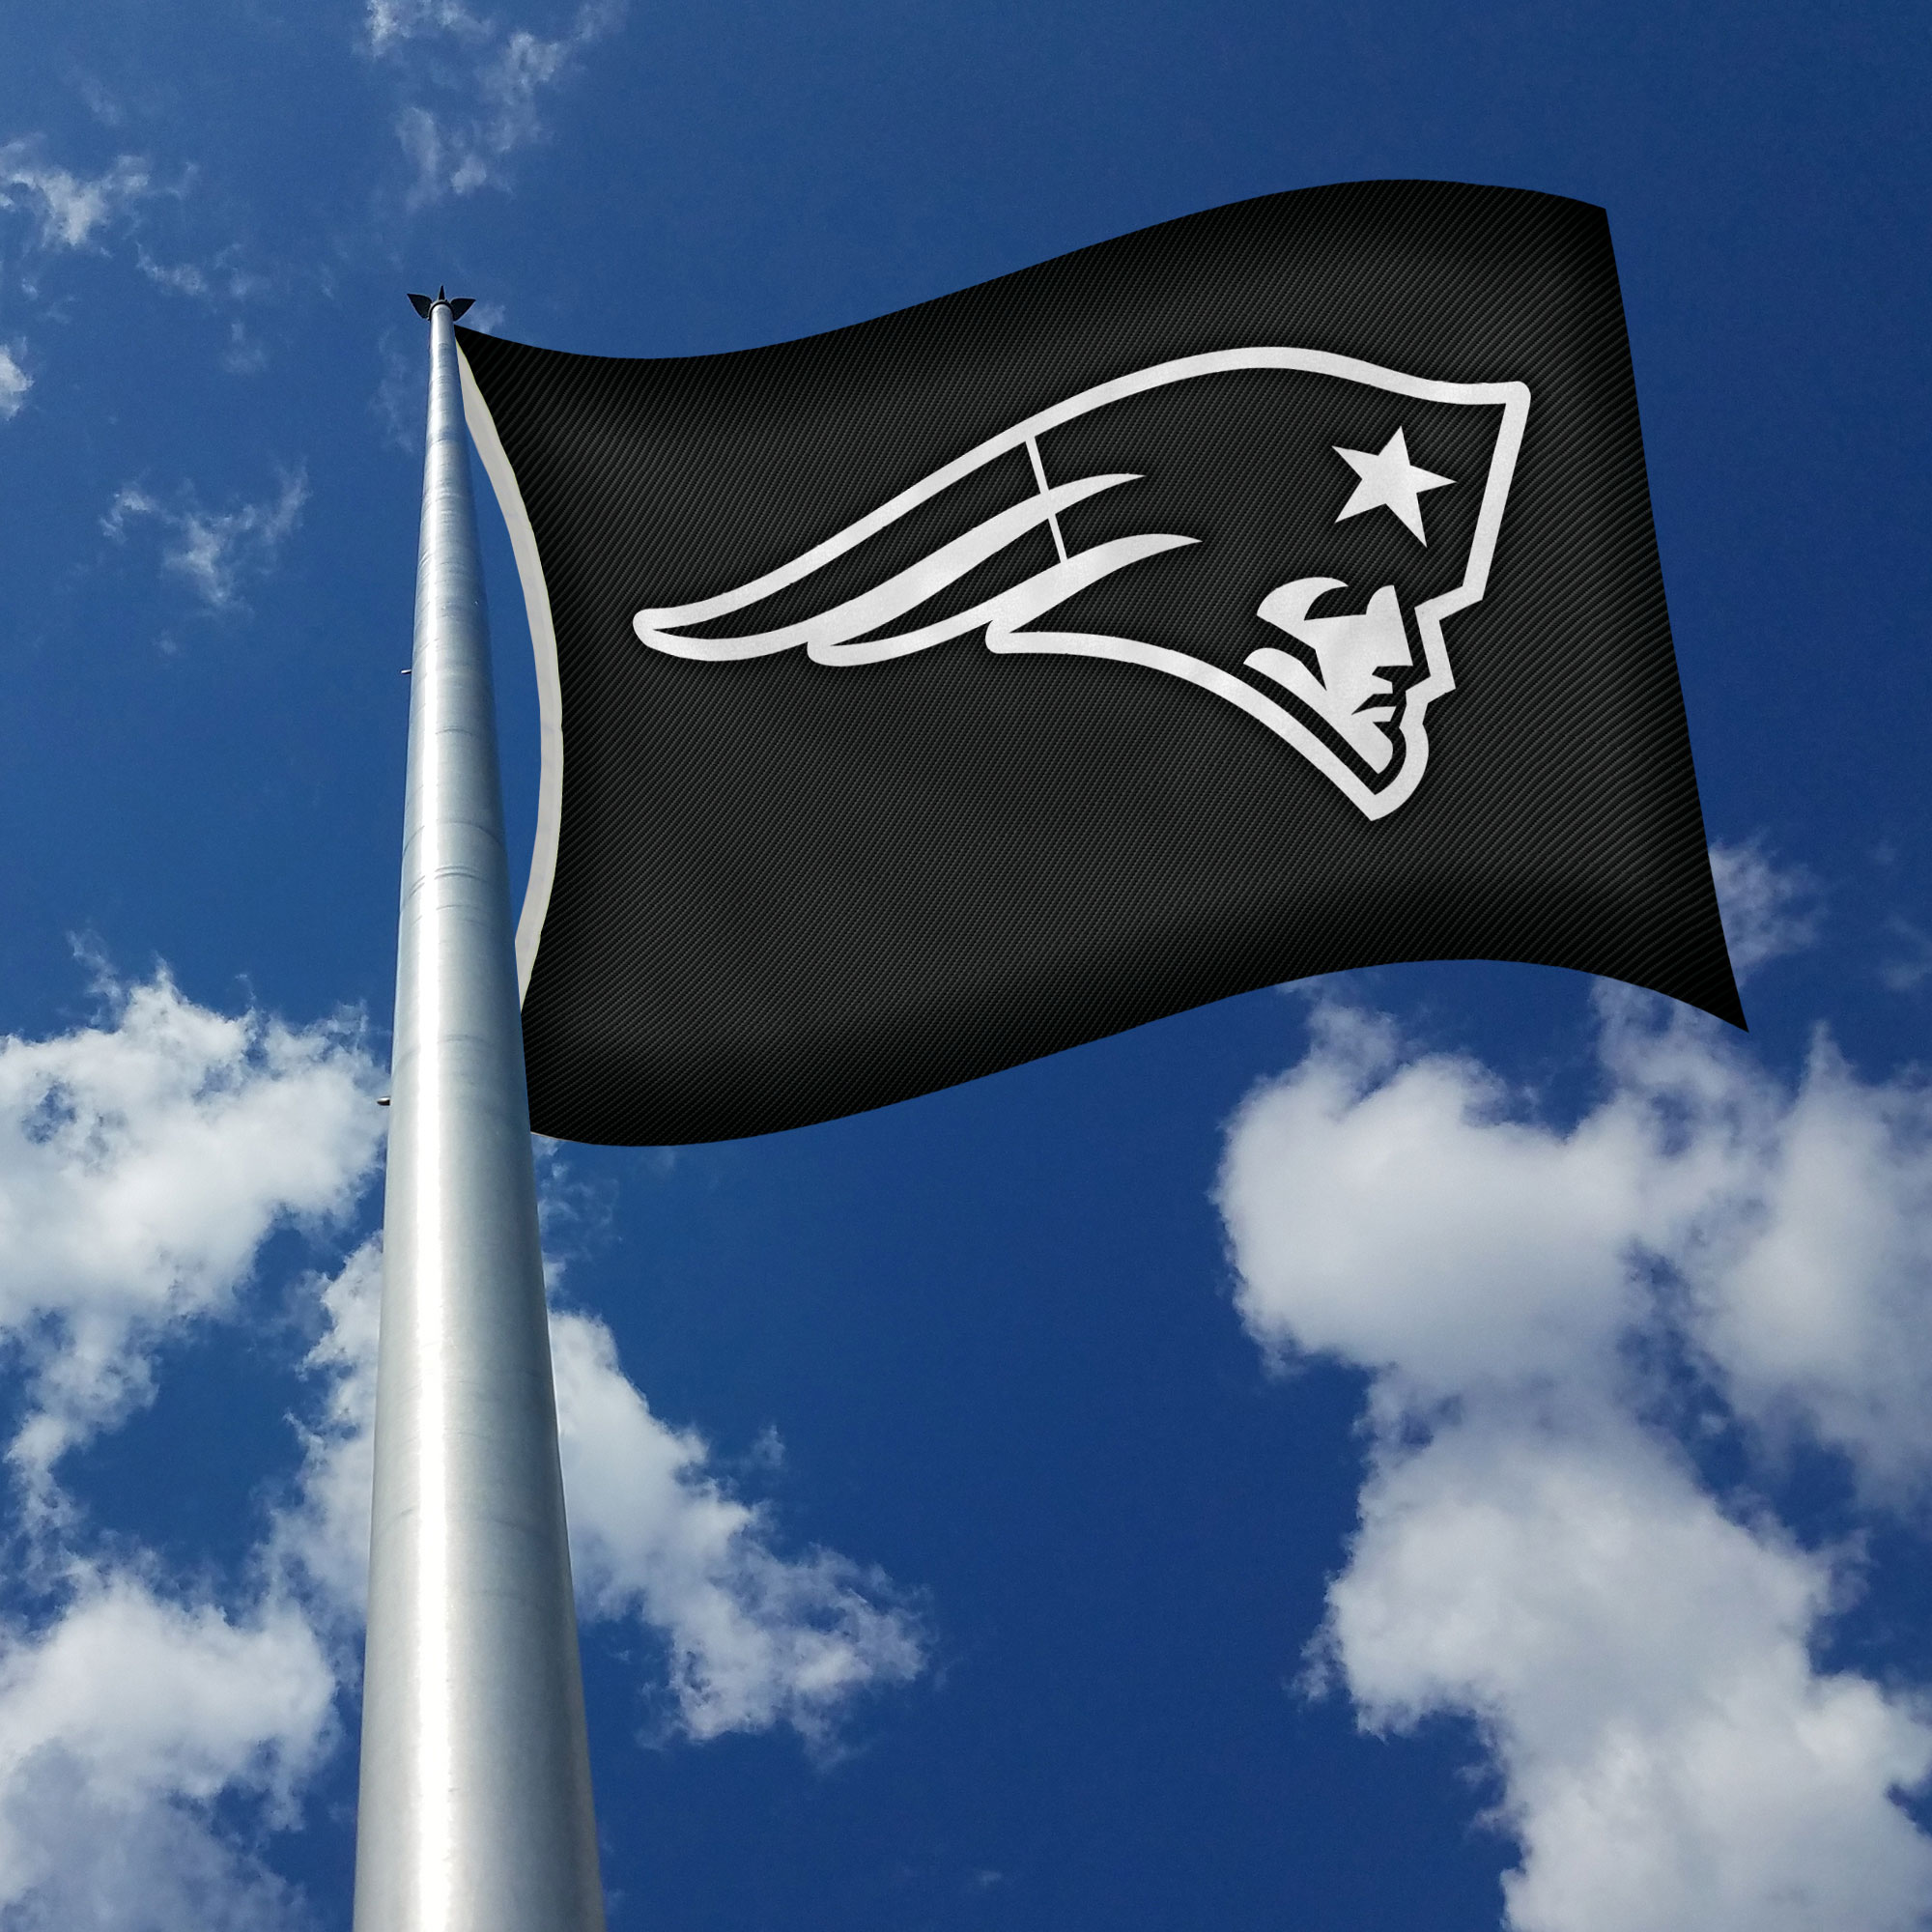 Rico Industries NFL Football New England Patriots Carbon Fiber 3' x 5' Banner Flag